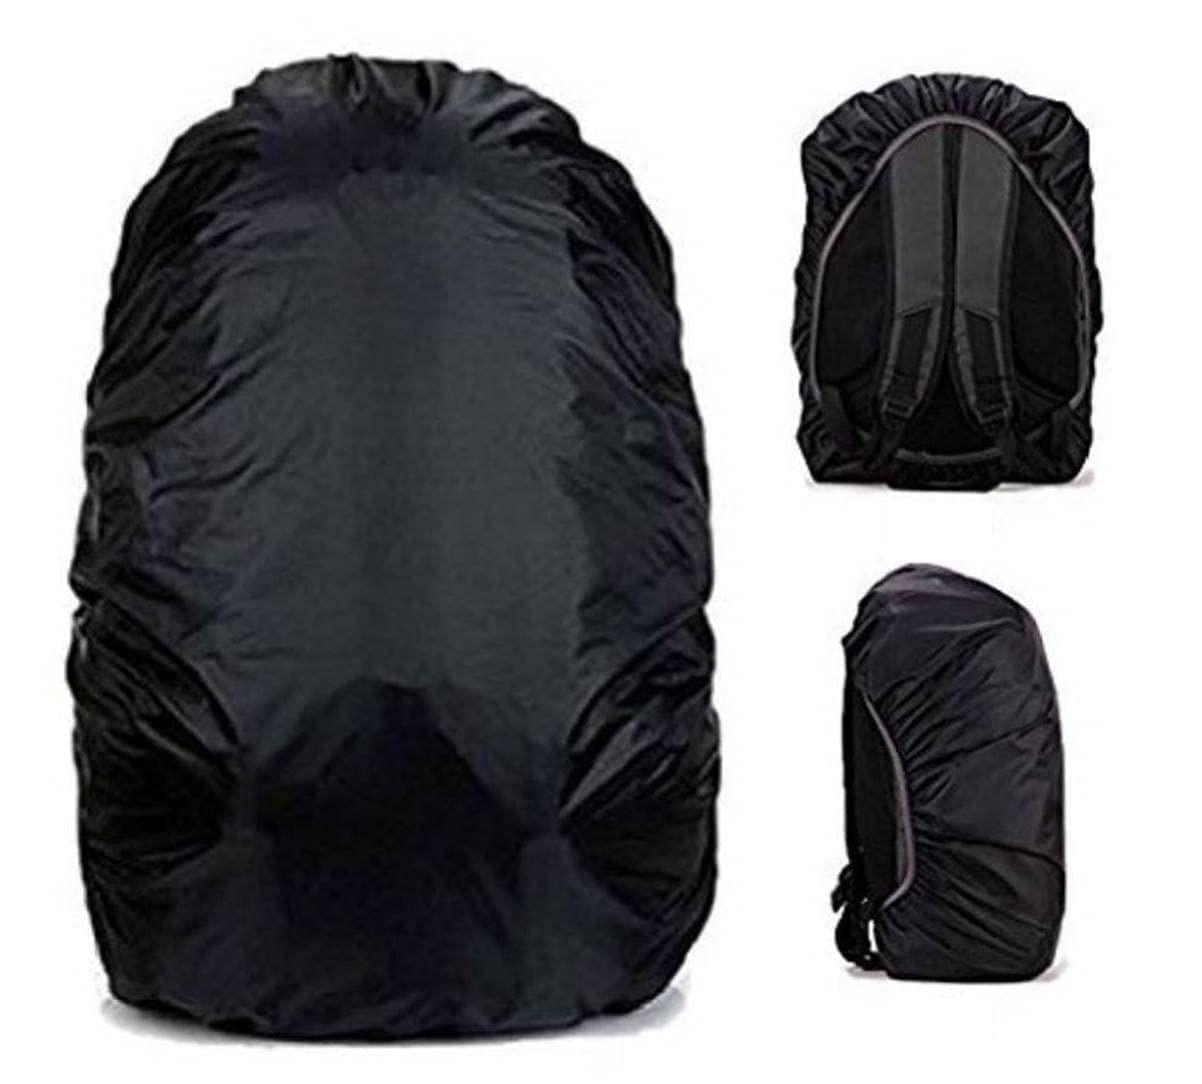 Store 4 Hope Nylon Rain & Dust Cover for Backpack 100% Waterproof (30-40 litres, Black)